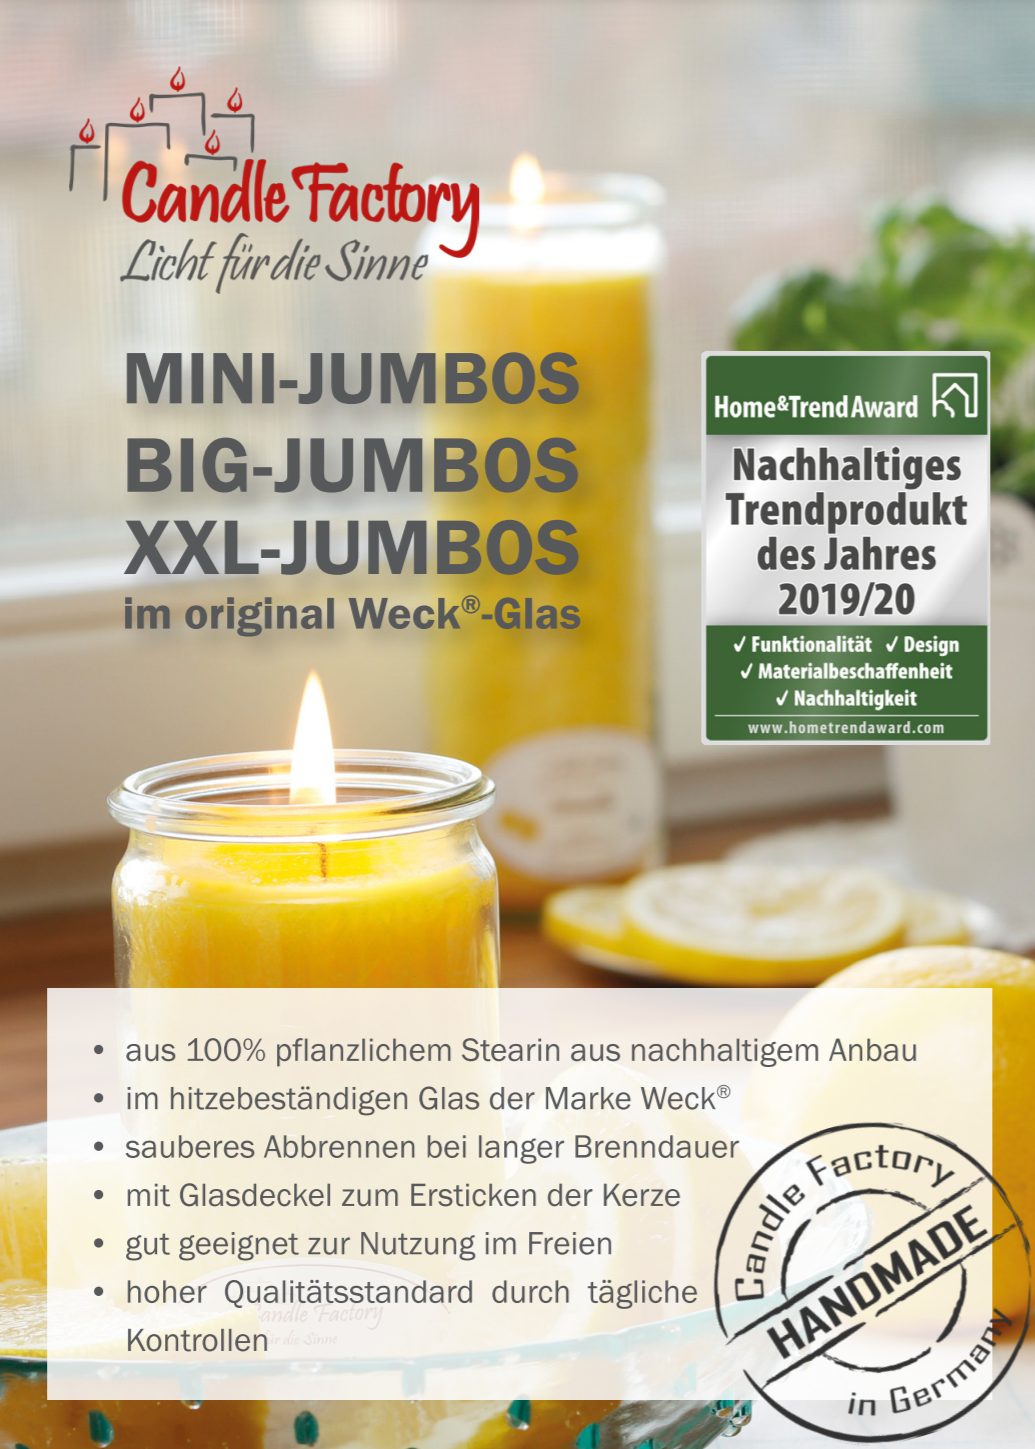 Candle Factory Mini-Jumbo Wildfeige